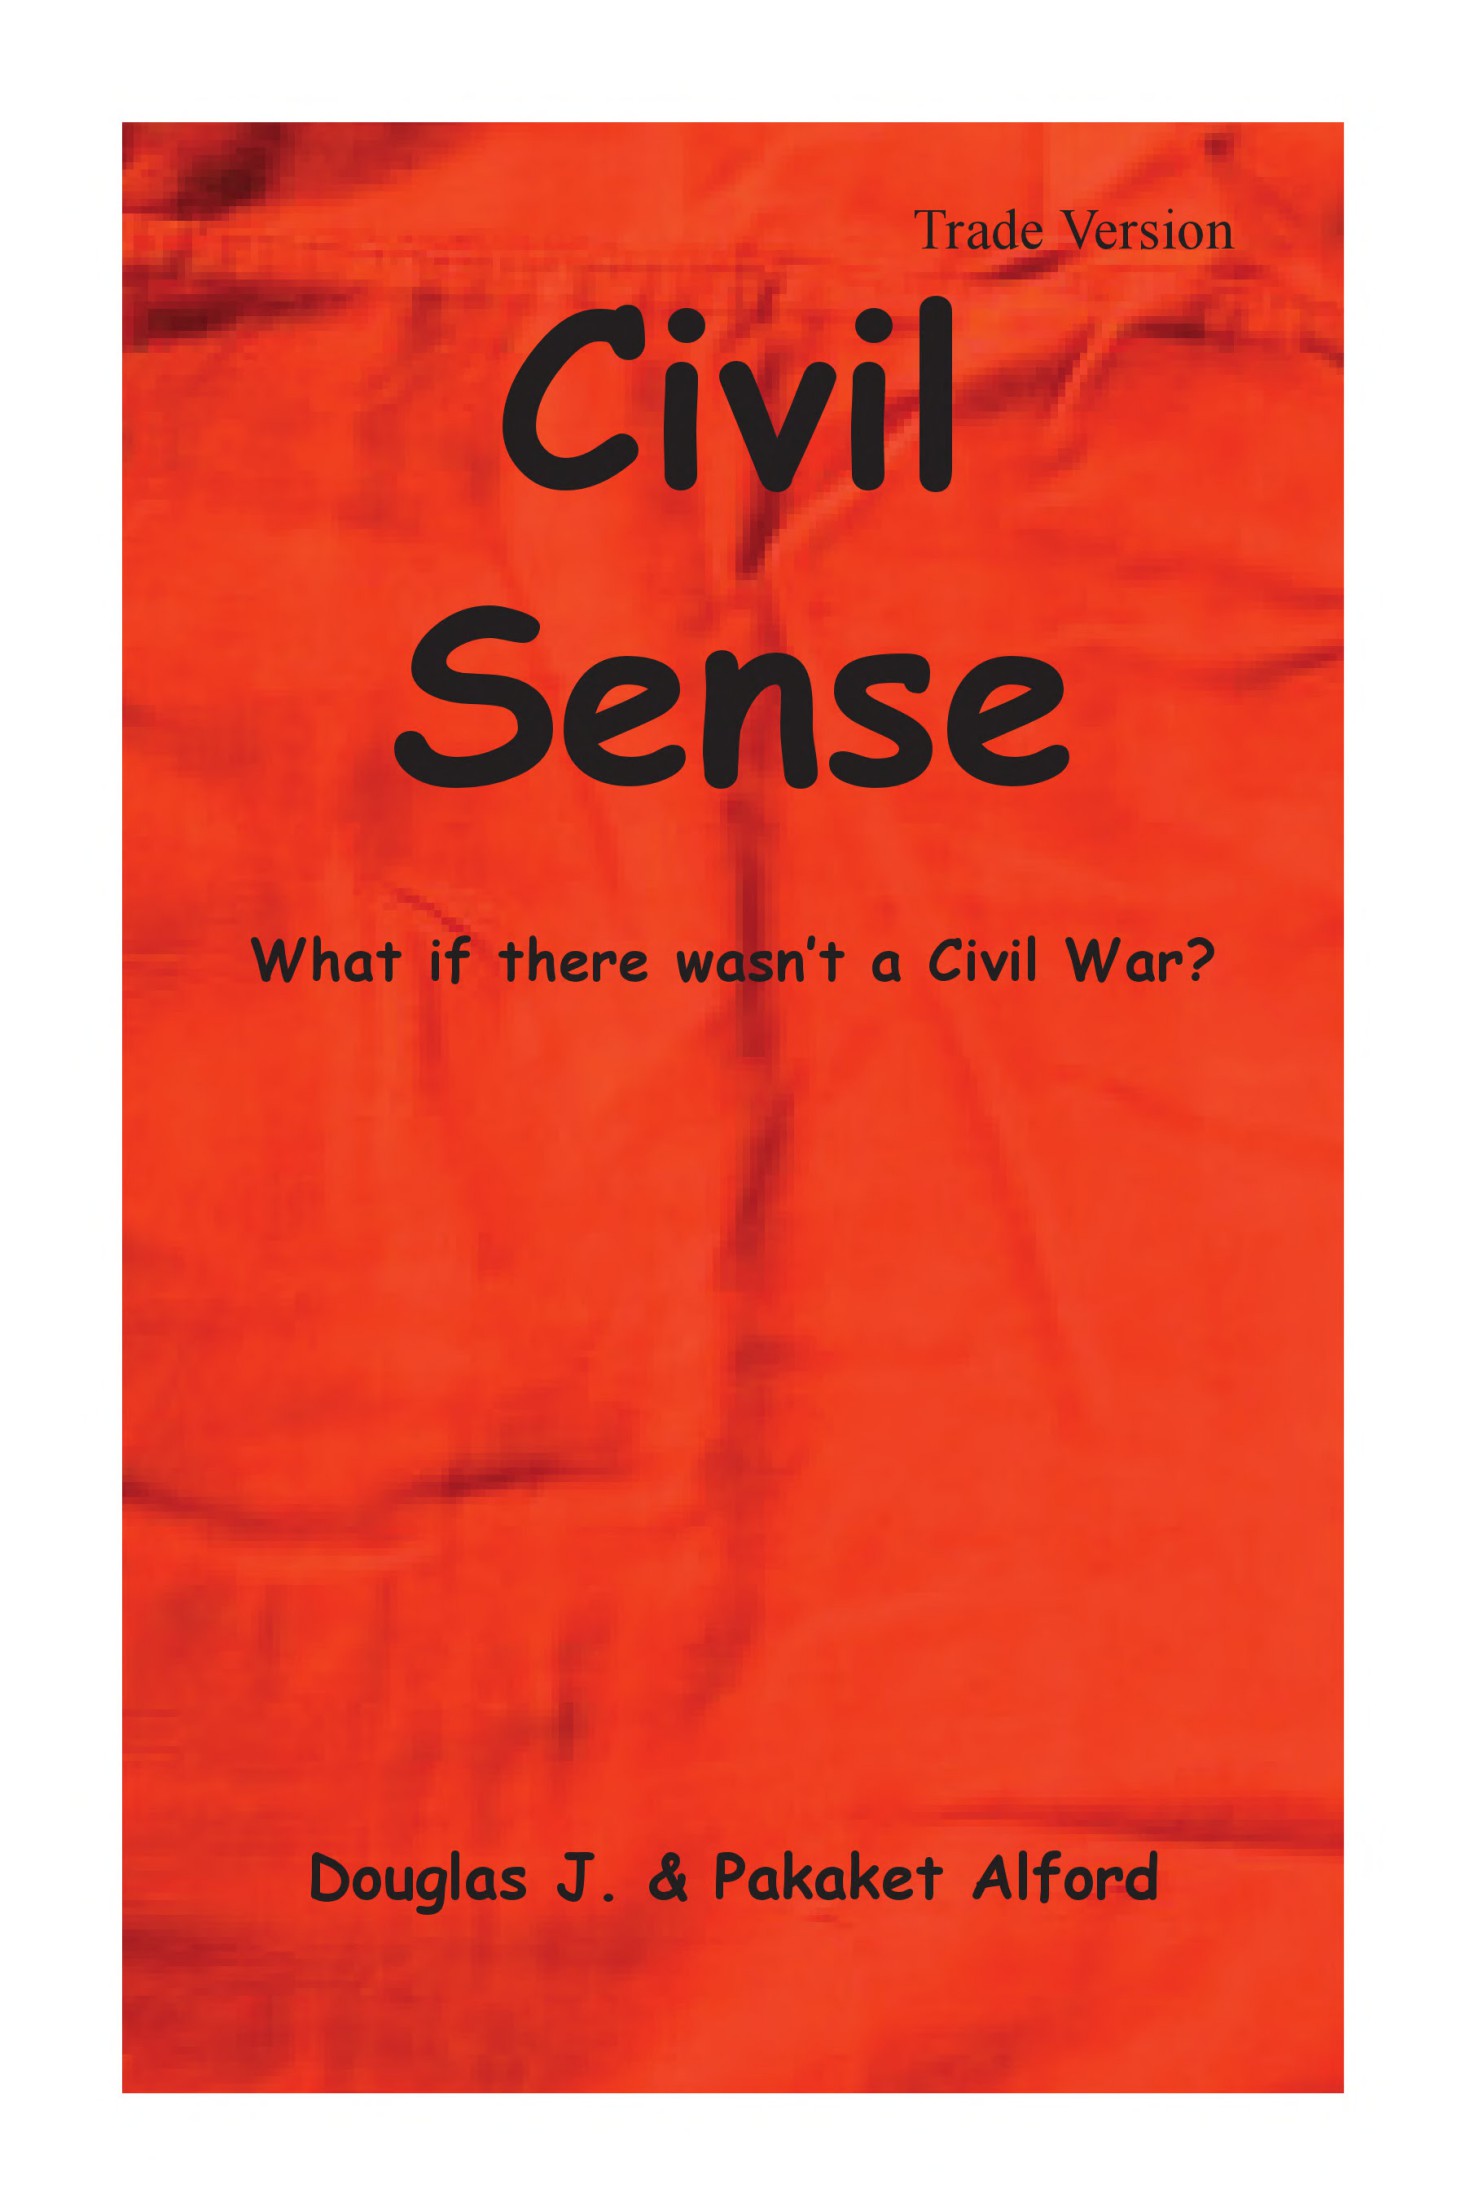 Civil Sense - What if There Wasn't a Civil War?